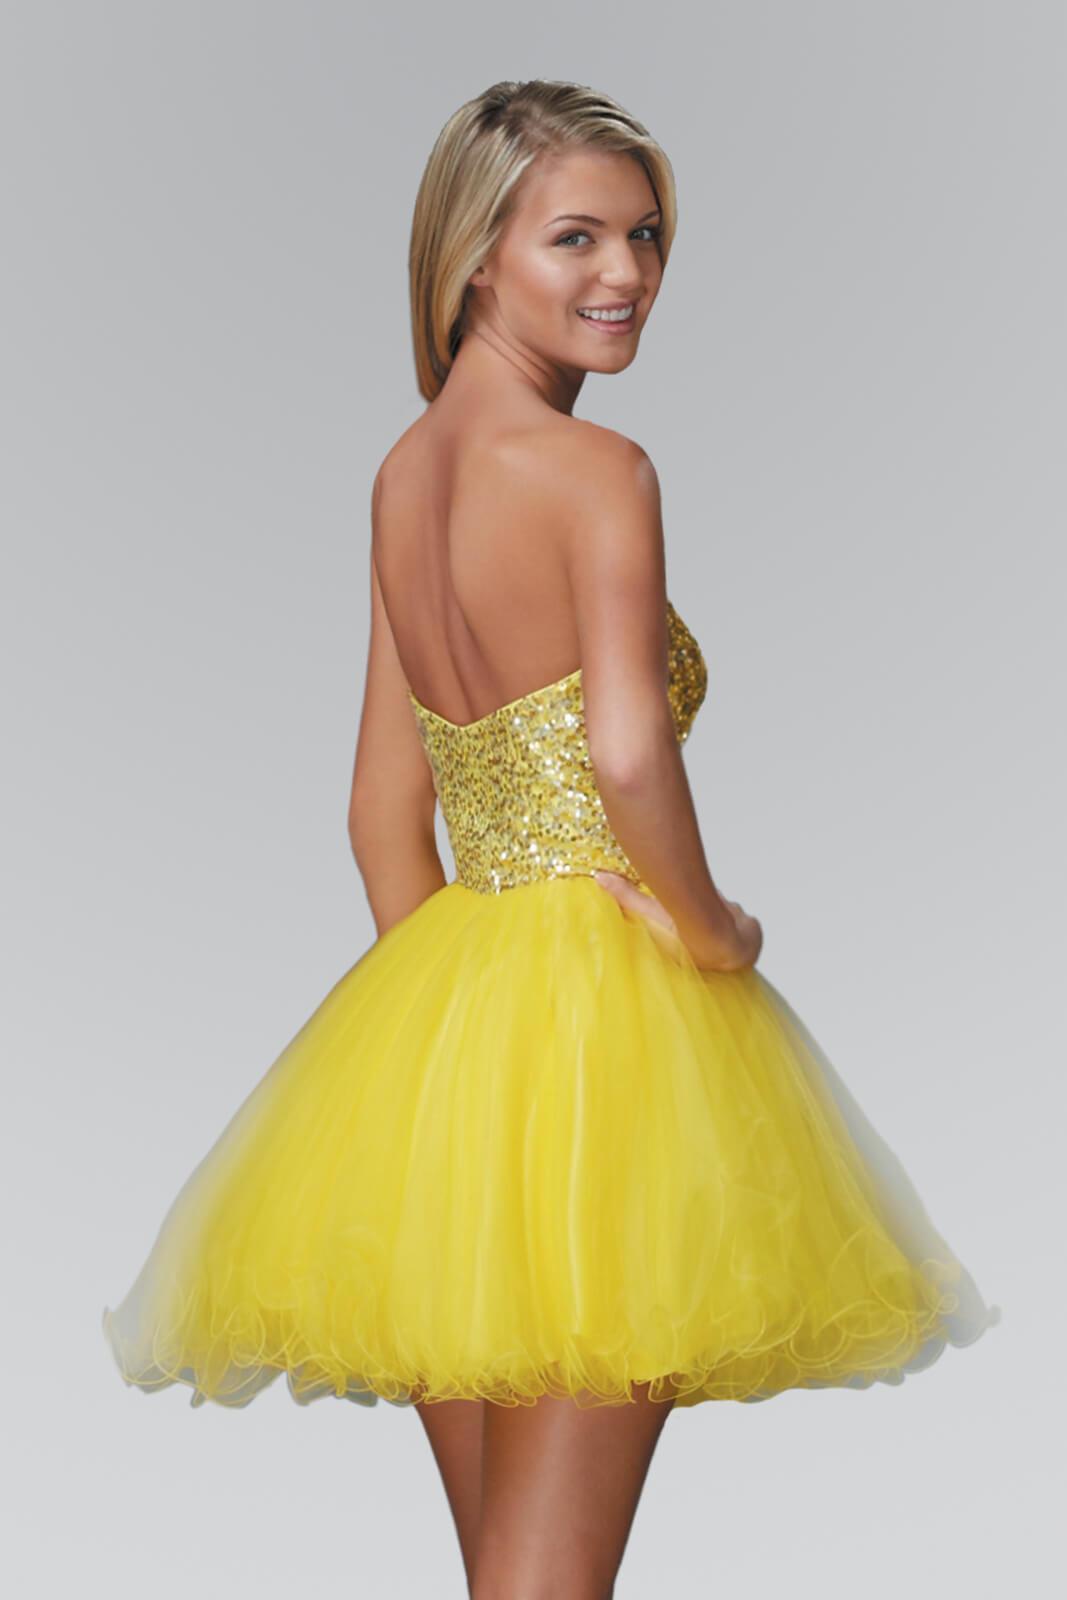 Sweetheart Short Prom Dress Homecoming - The Dress Outlet Elizabeth K